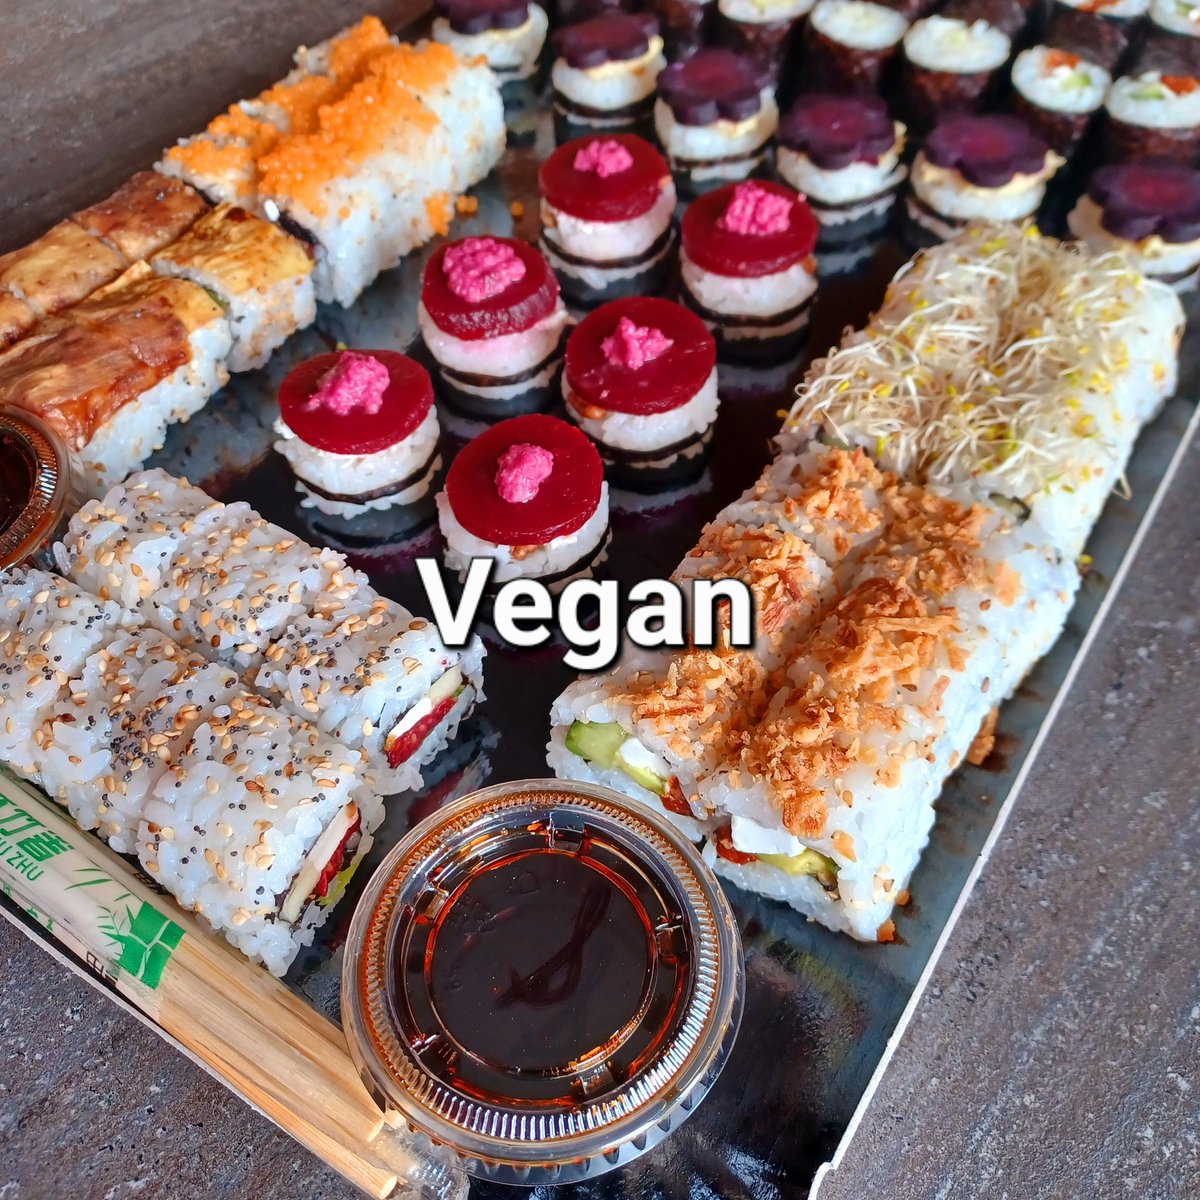 #vegansushi #traiteurvegan #vegan #sushi #sansingredientsdorigineanimale #veganetgourmand #choosevegan